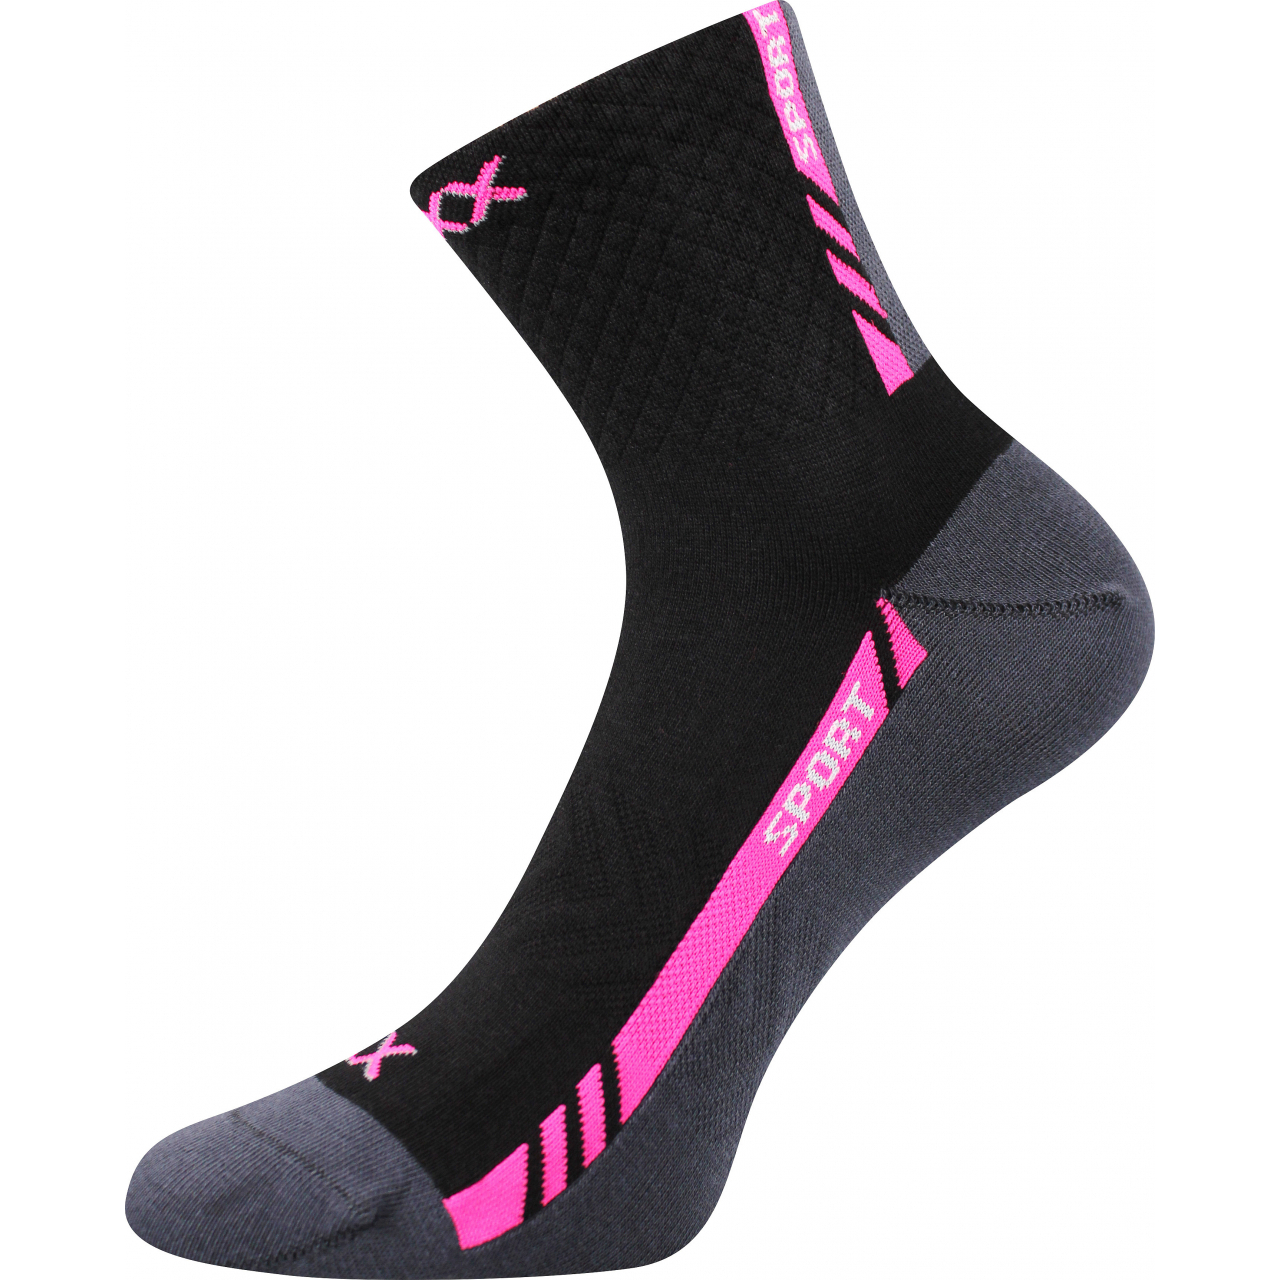 Ponožky slabé sportovní unisex Voxx Pius - černé-růžové, 39-42